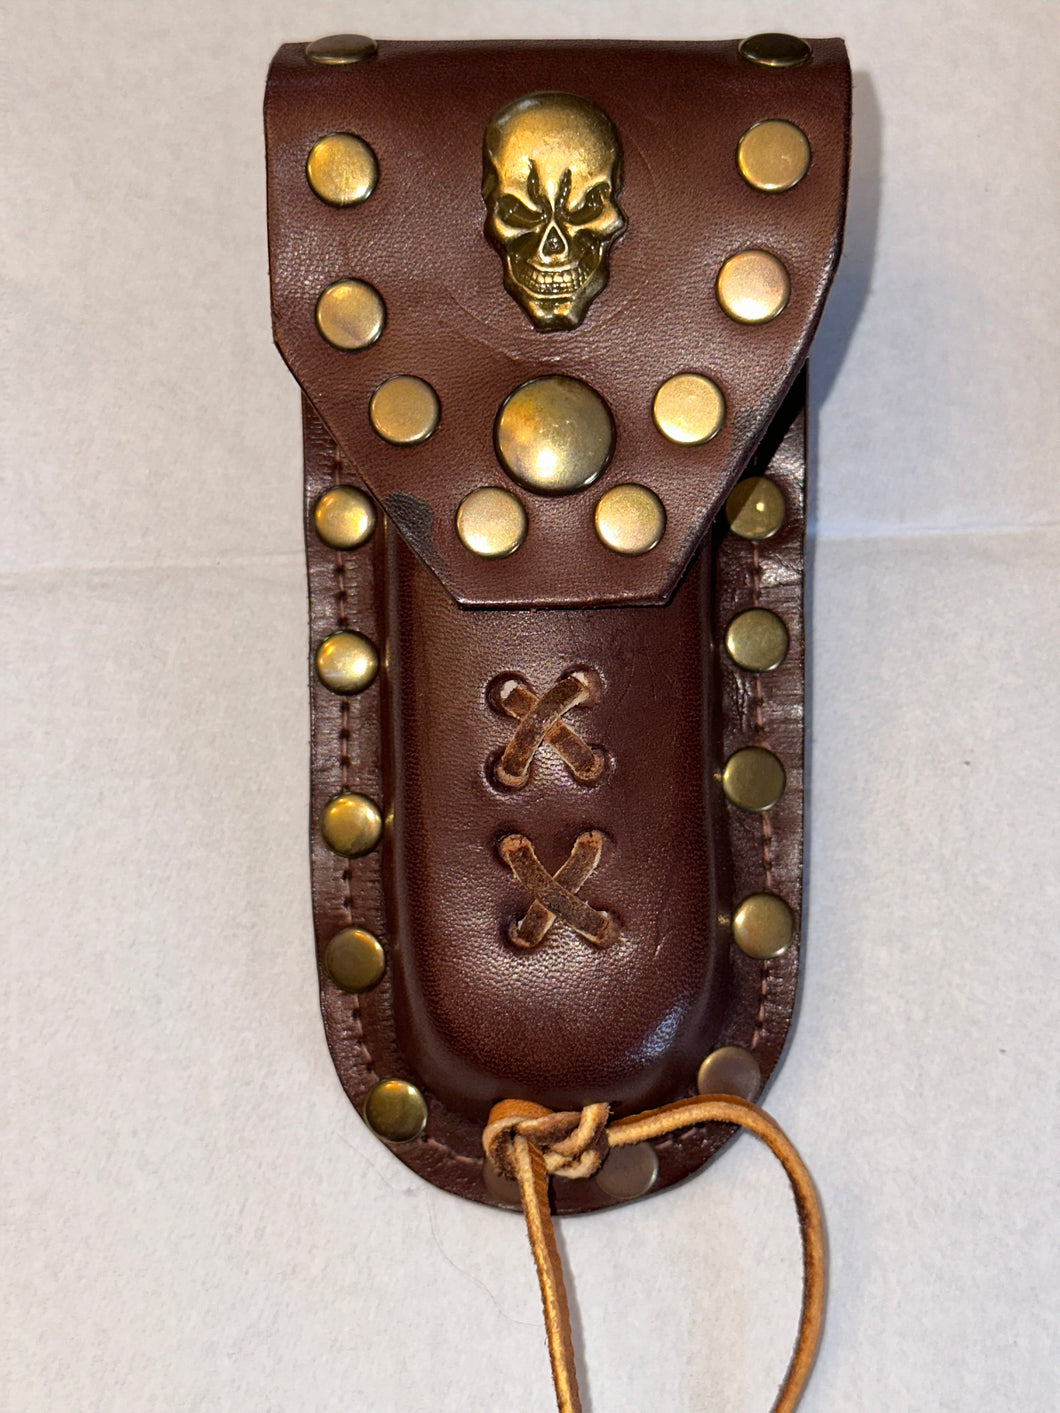 Buck 110 Leather Knife Case - Gold Skull (Medium Brown)